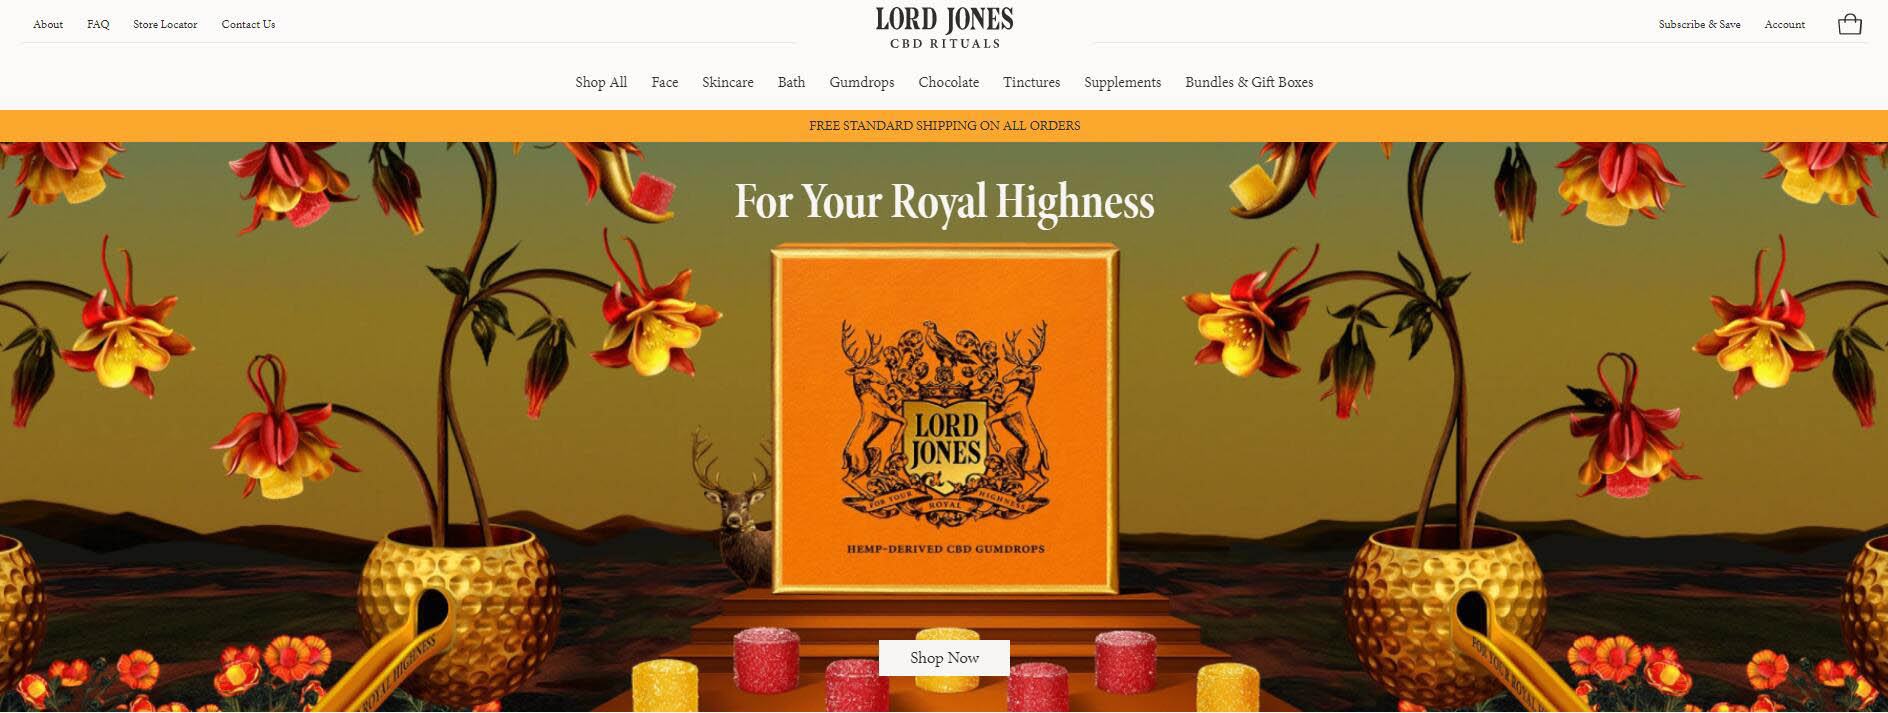 Lord Jones Affiliate Program